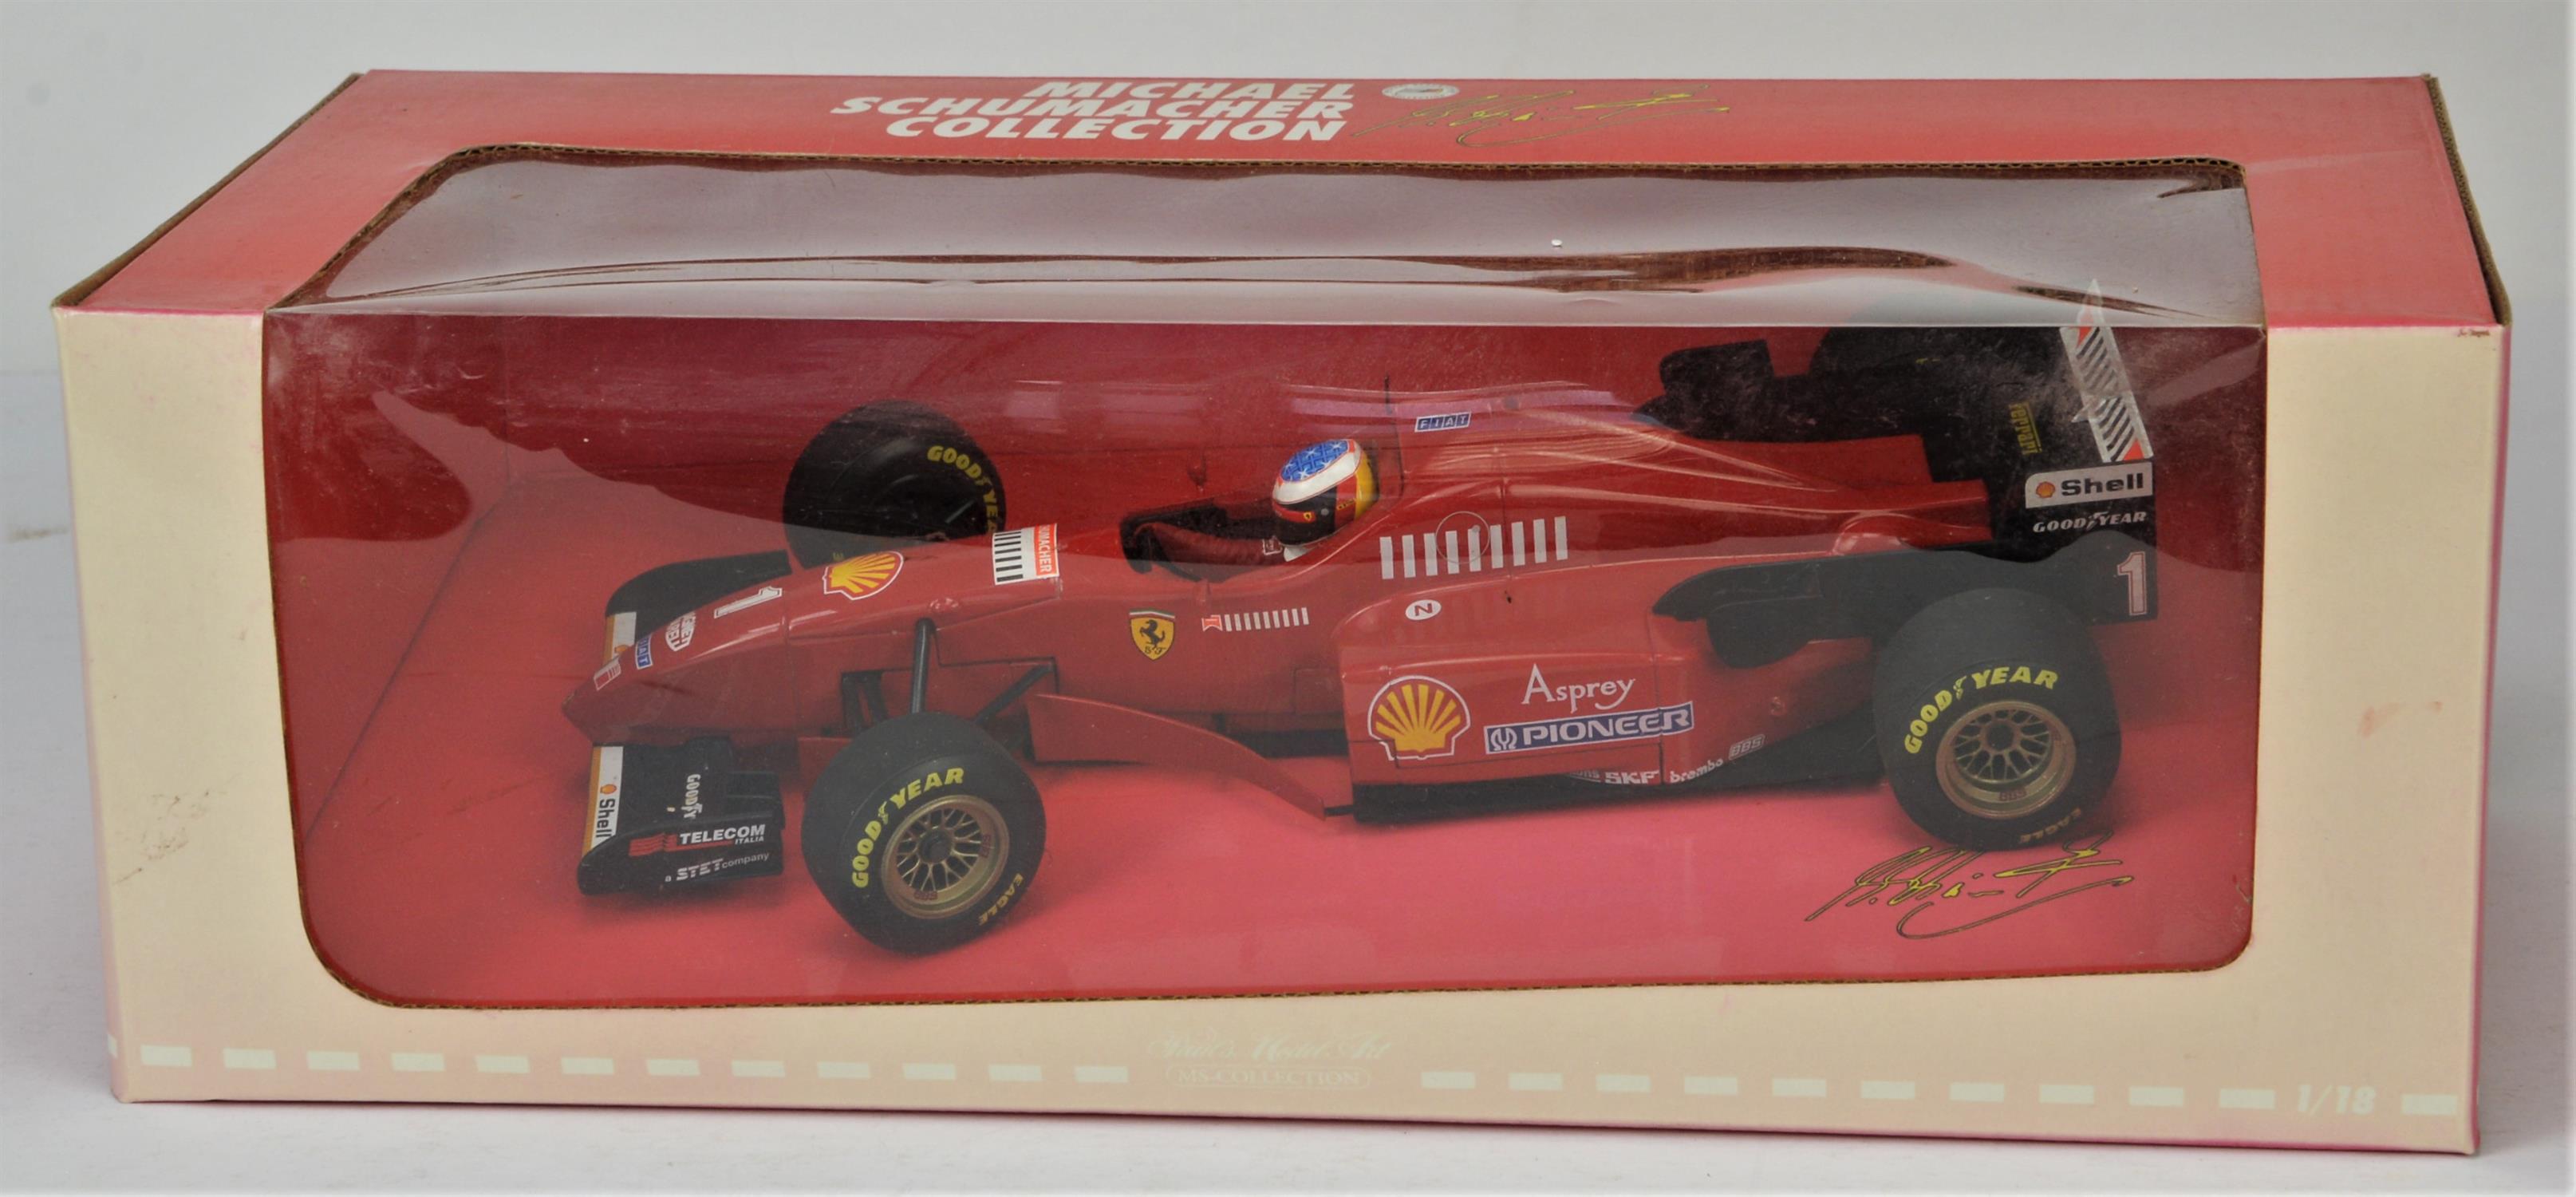 Hot Wheels Racing - Four Michael Schumacher collection, Boxed Mattel Ferrari 1:18 scale models, - Image 3 of 5